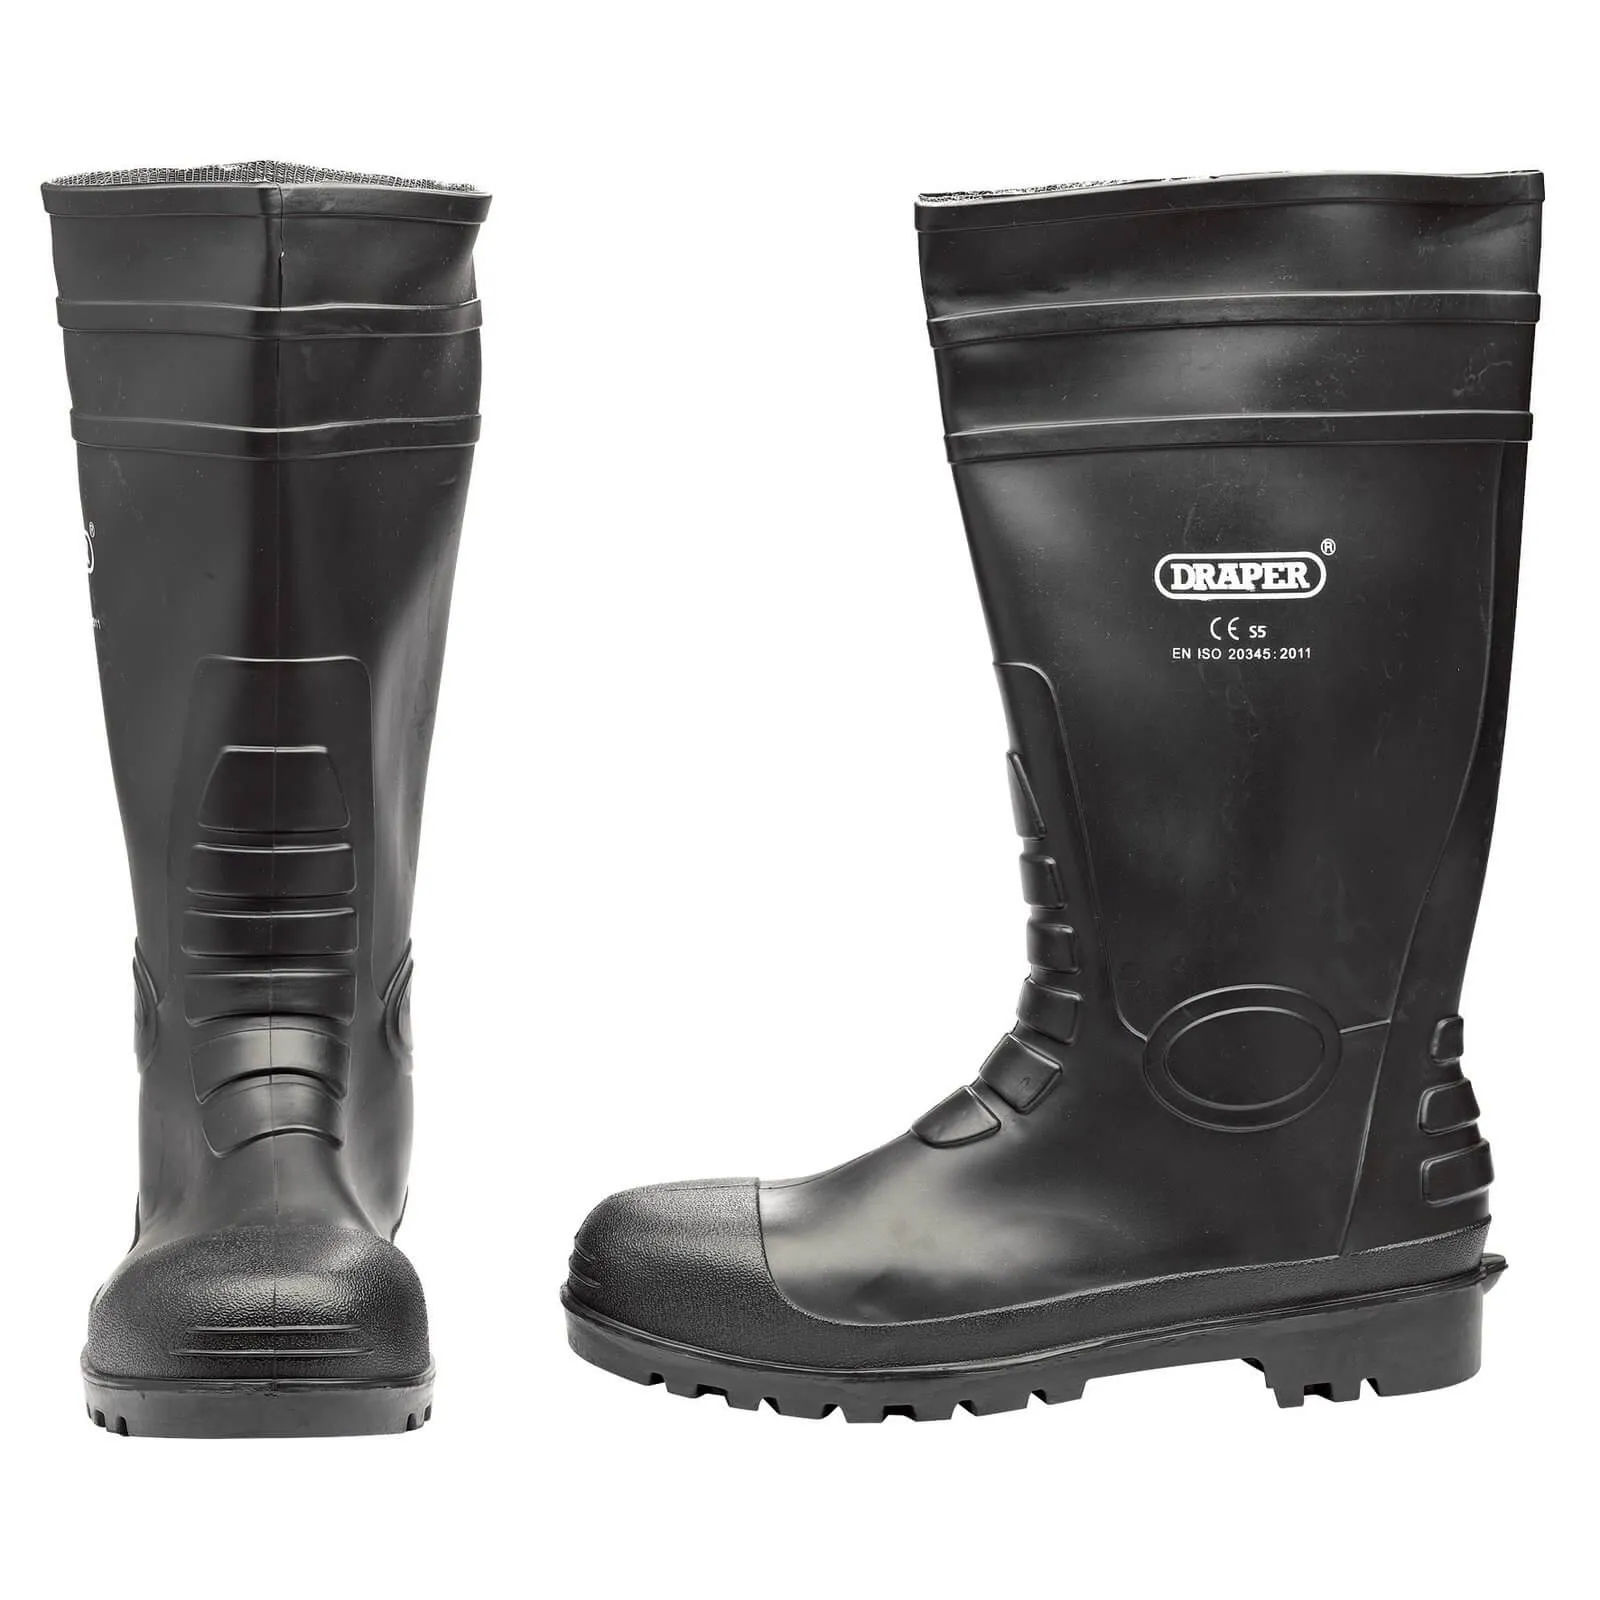 Draper Safety Wellington Boots - Black, Size 9